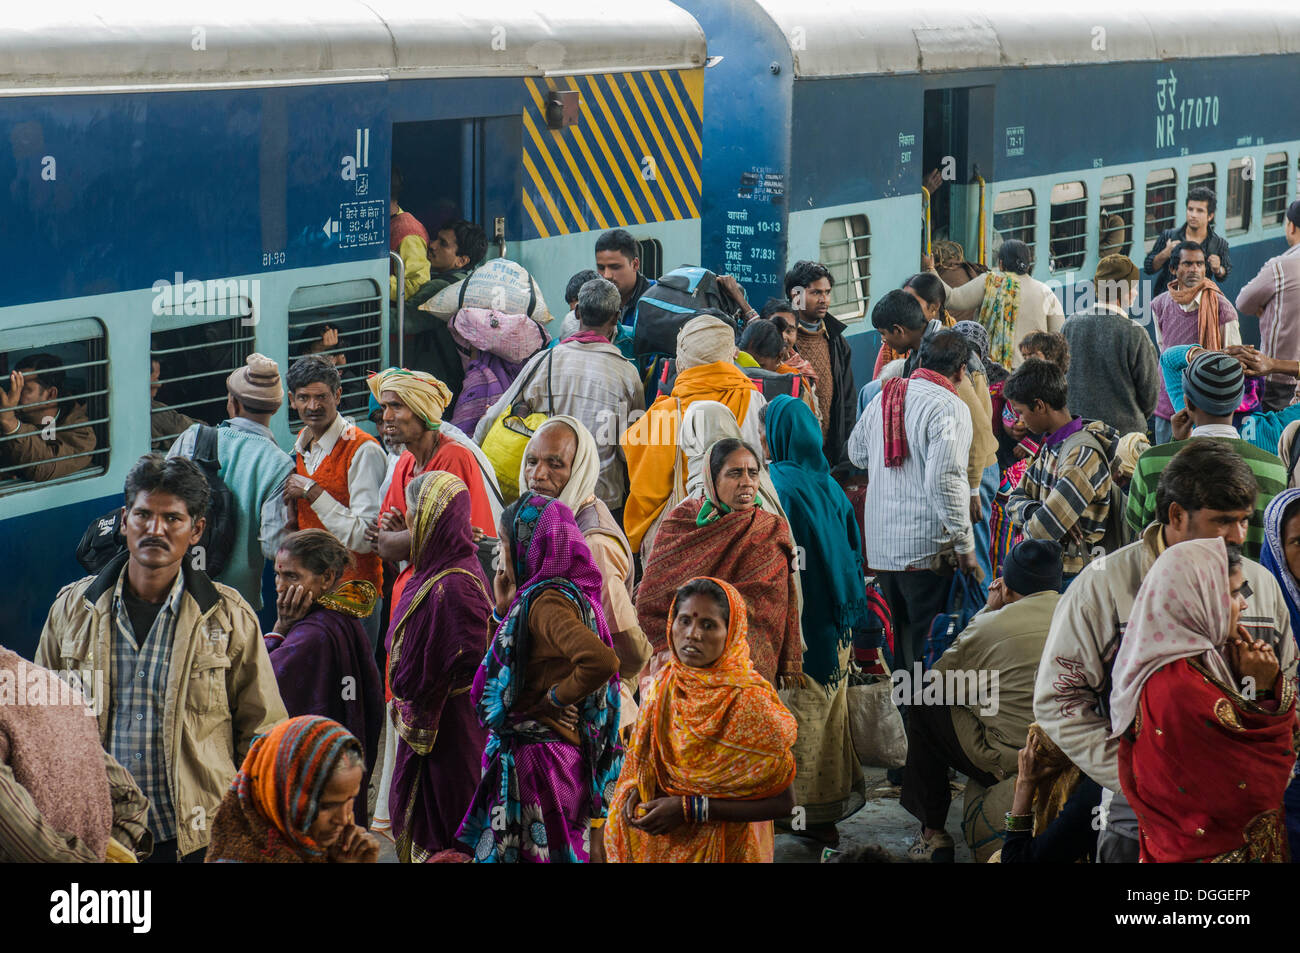 Crowds of people pushing inside a train, on a platform of the railway station, Allahabad, Uttar Pradesh, India Stock Photo